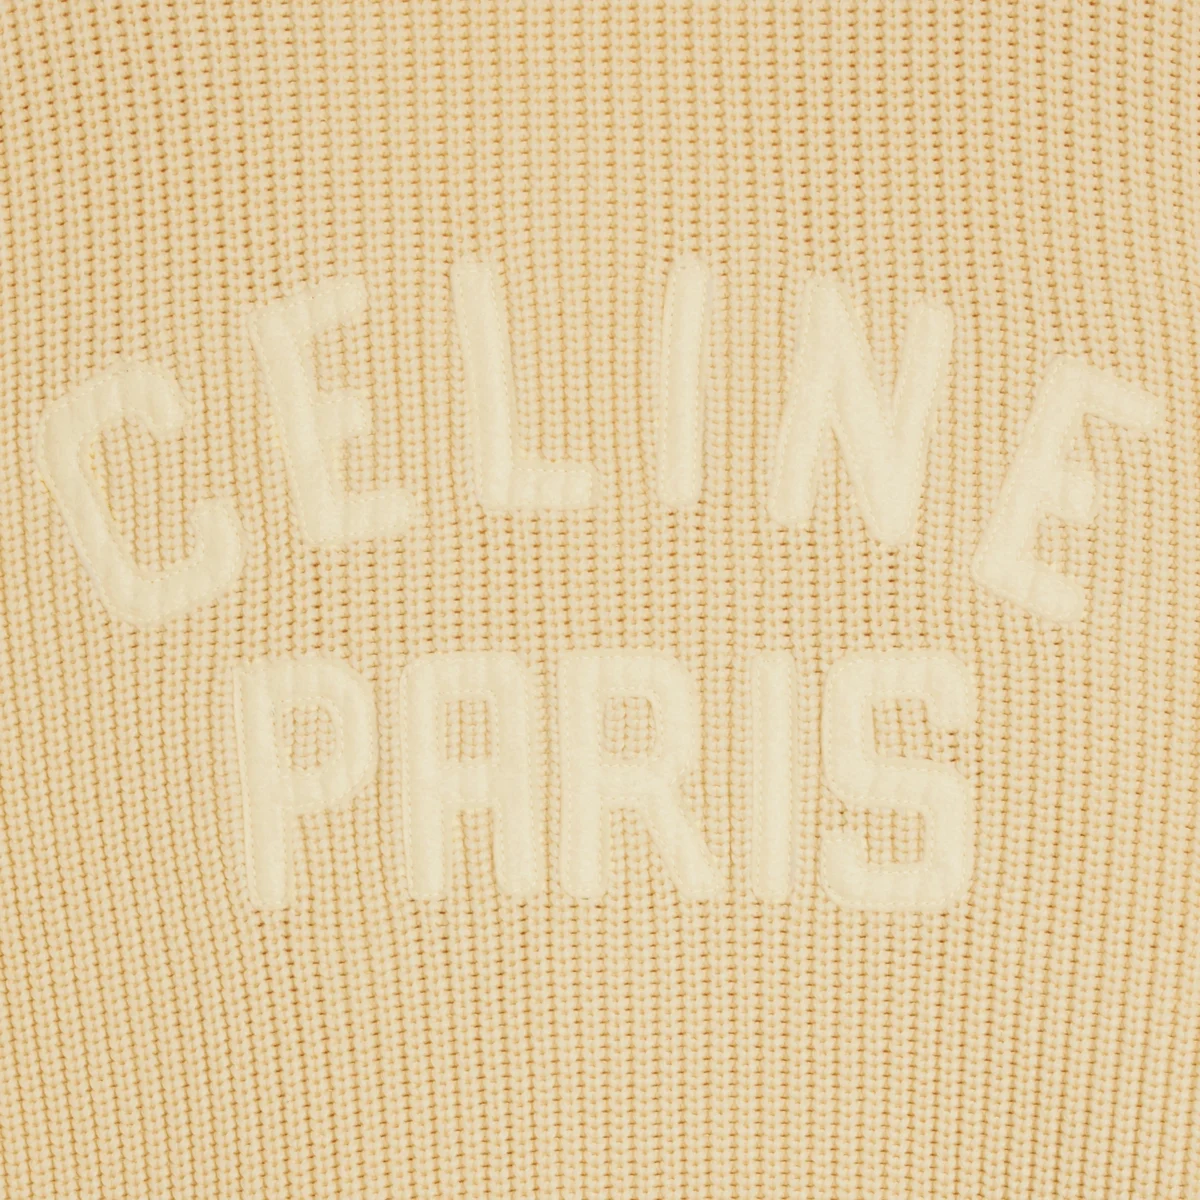 celine off white beige sweater